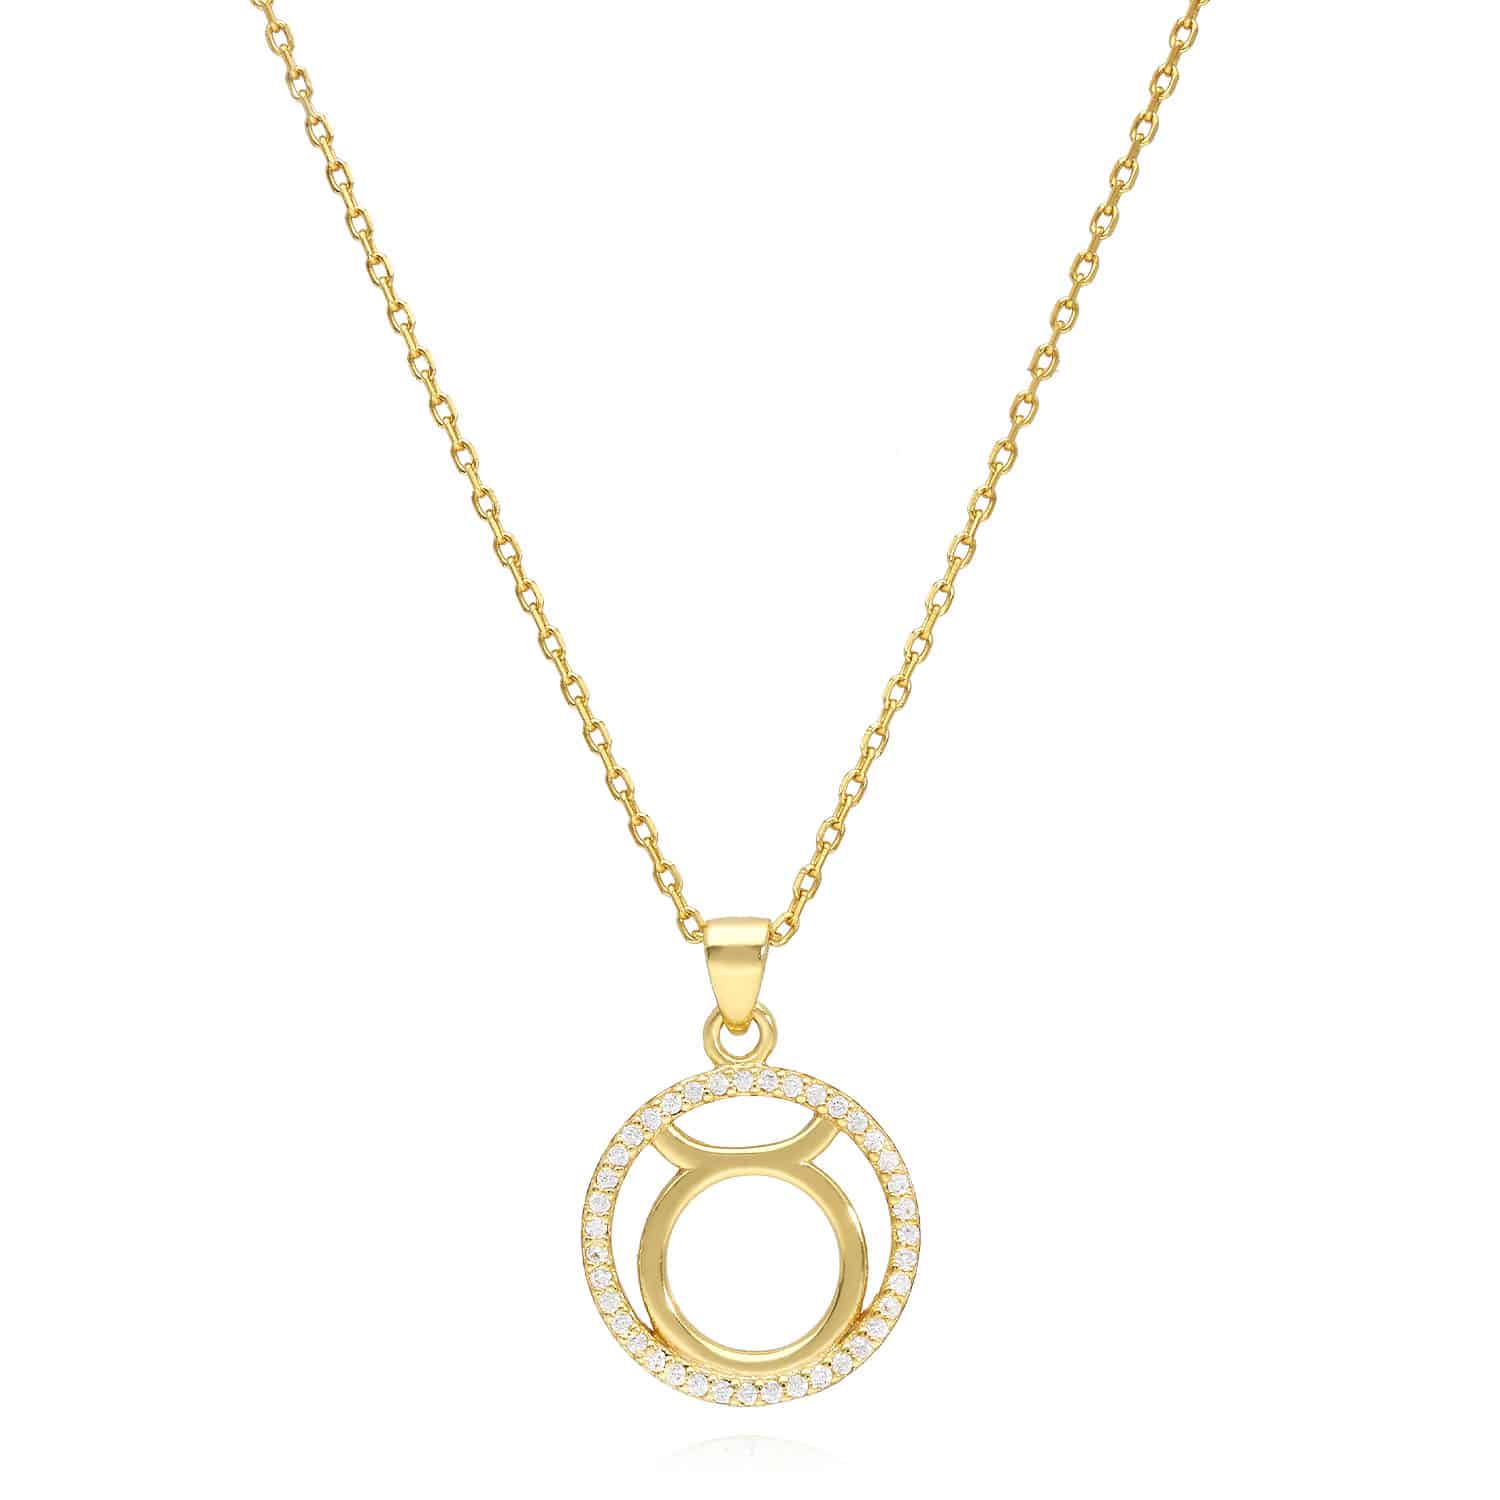 18K Gold Over Silver Simulated Diamond Zodiac Charm Pendant Necklace 16"-18" Adj - Taurus